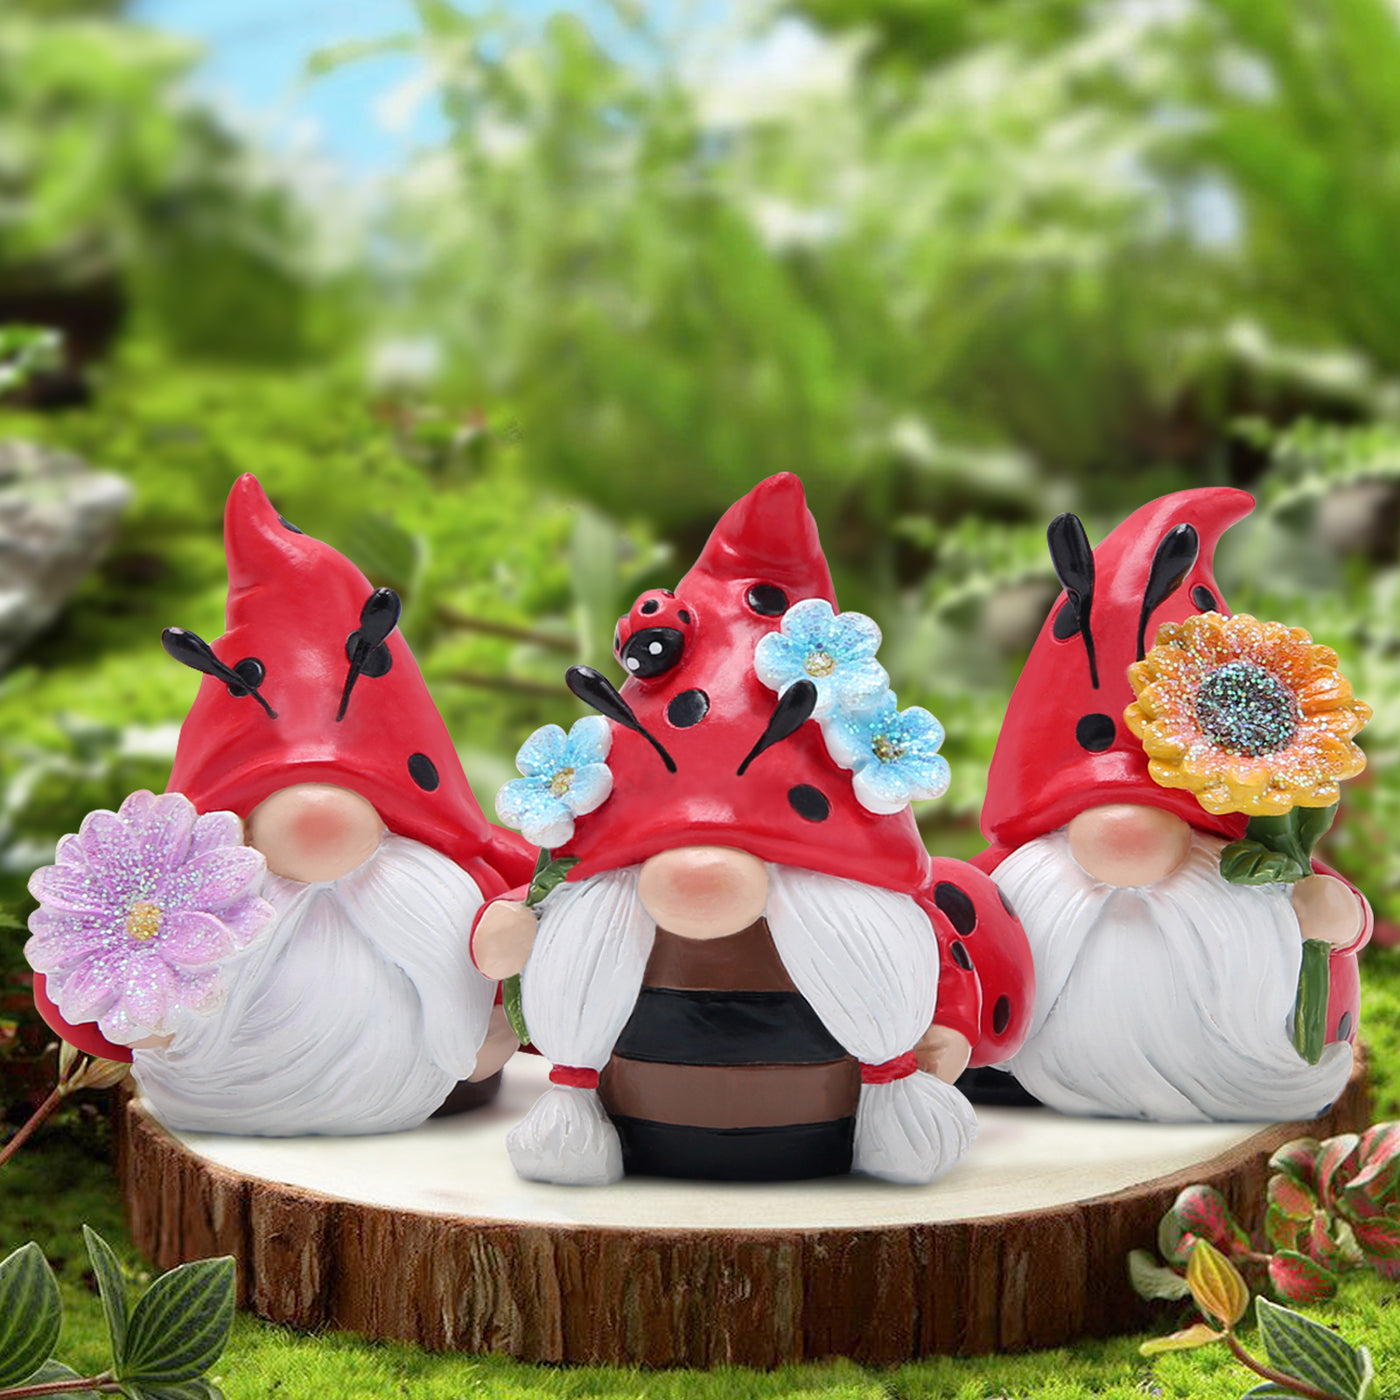 Hodao Bumble Bee Spring Garden Gnomes Decorations